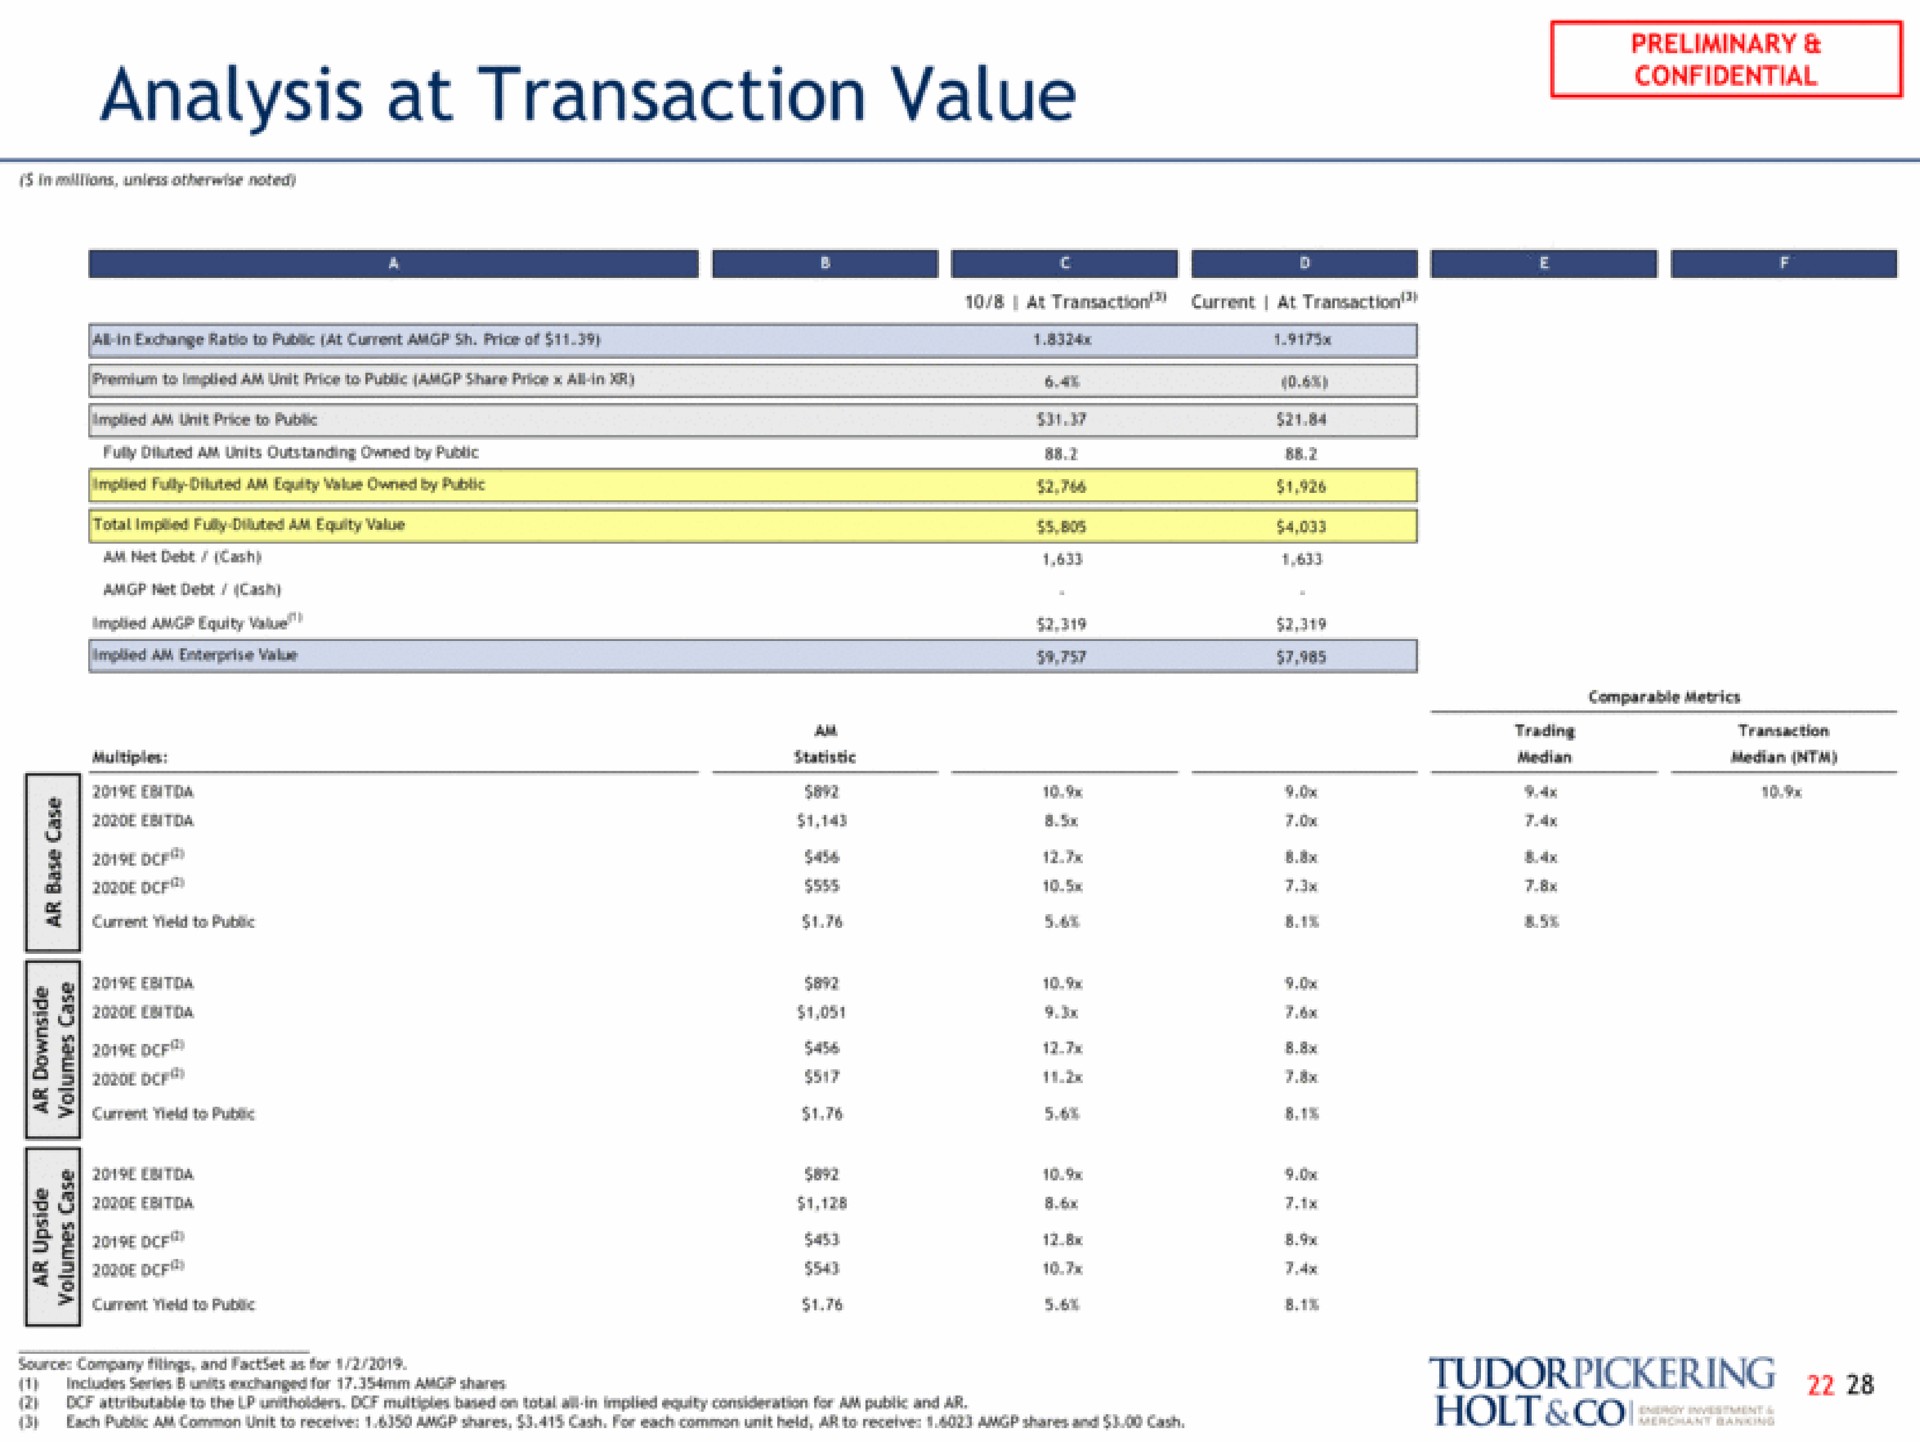 analysis at transaction value seer | Tudor, Pickering, Holt & Co